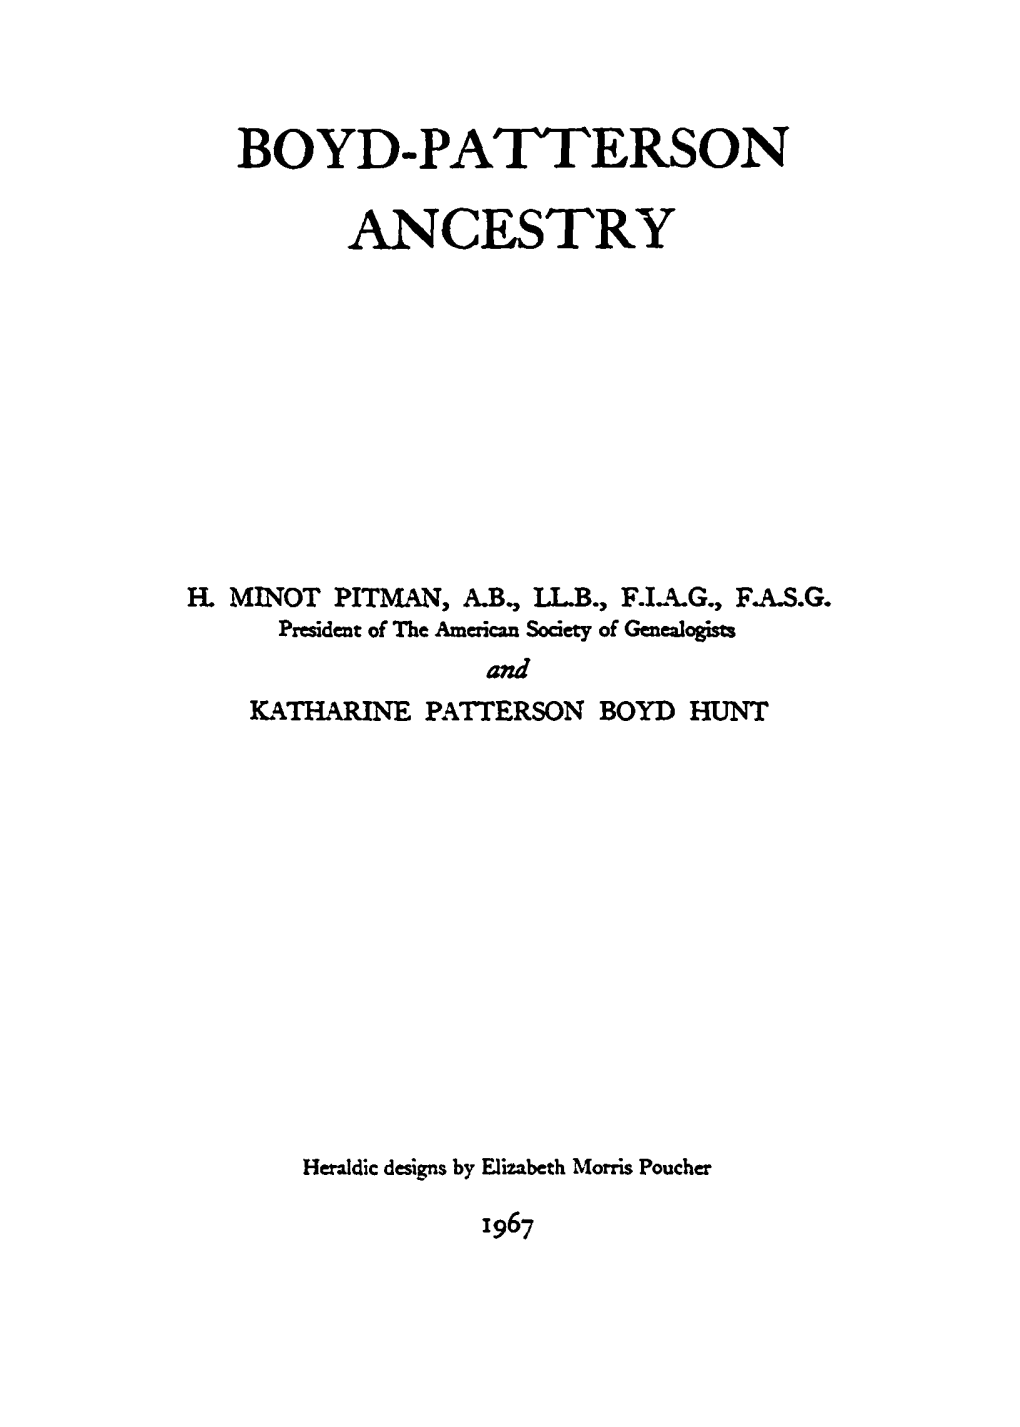 Boyd-Patterson Ancestry